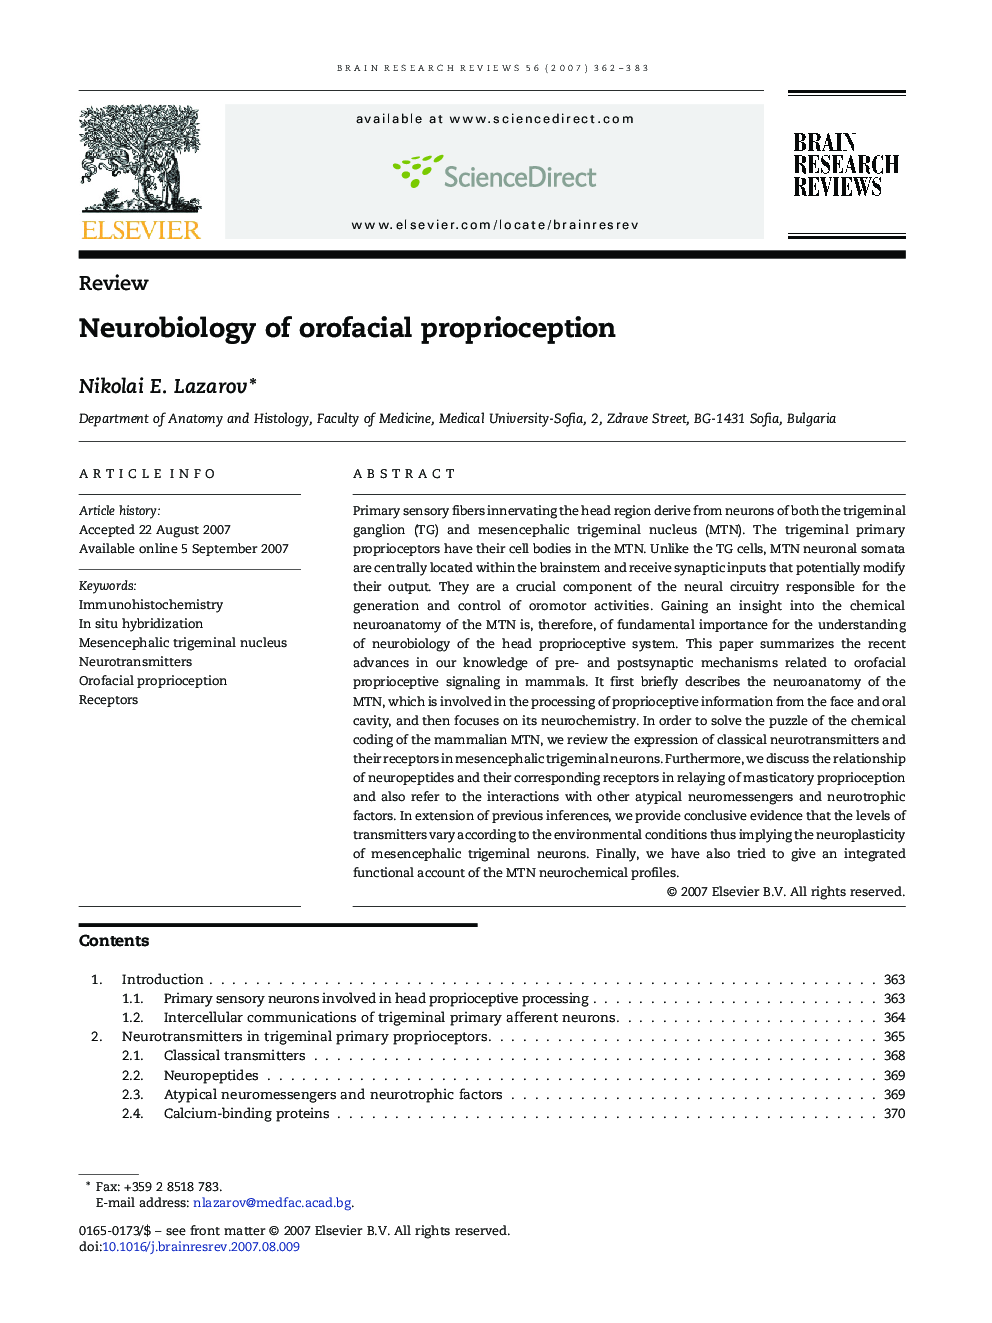 Neurobiology of orofacial proprioception